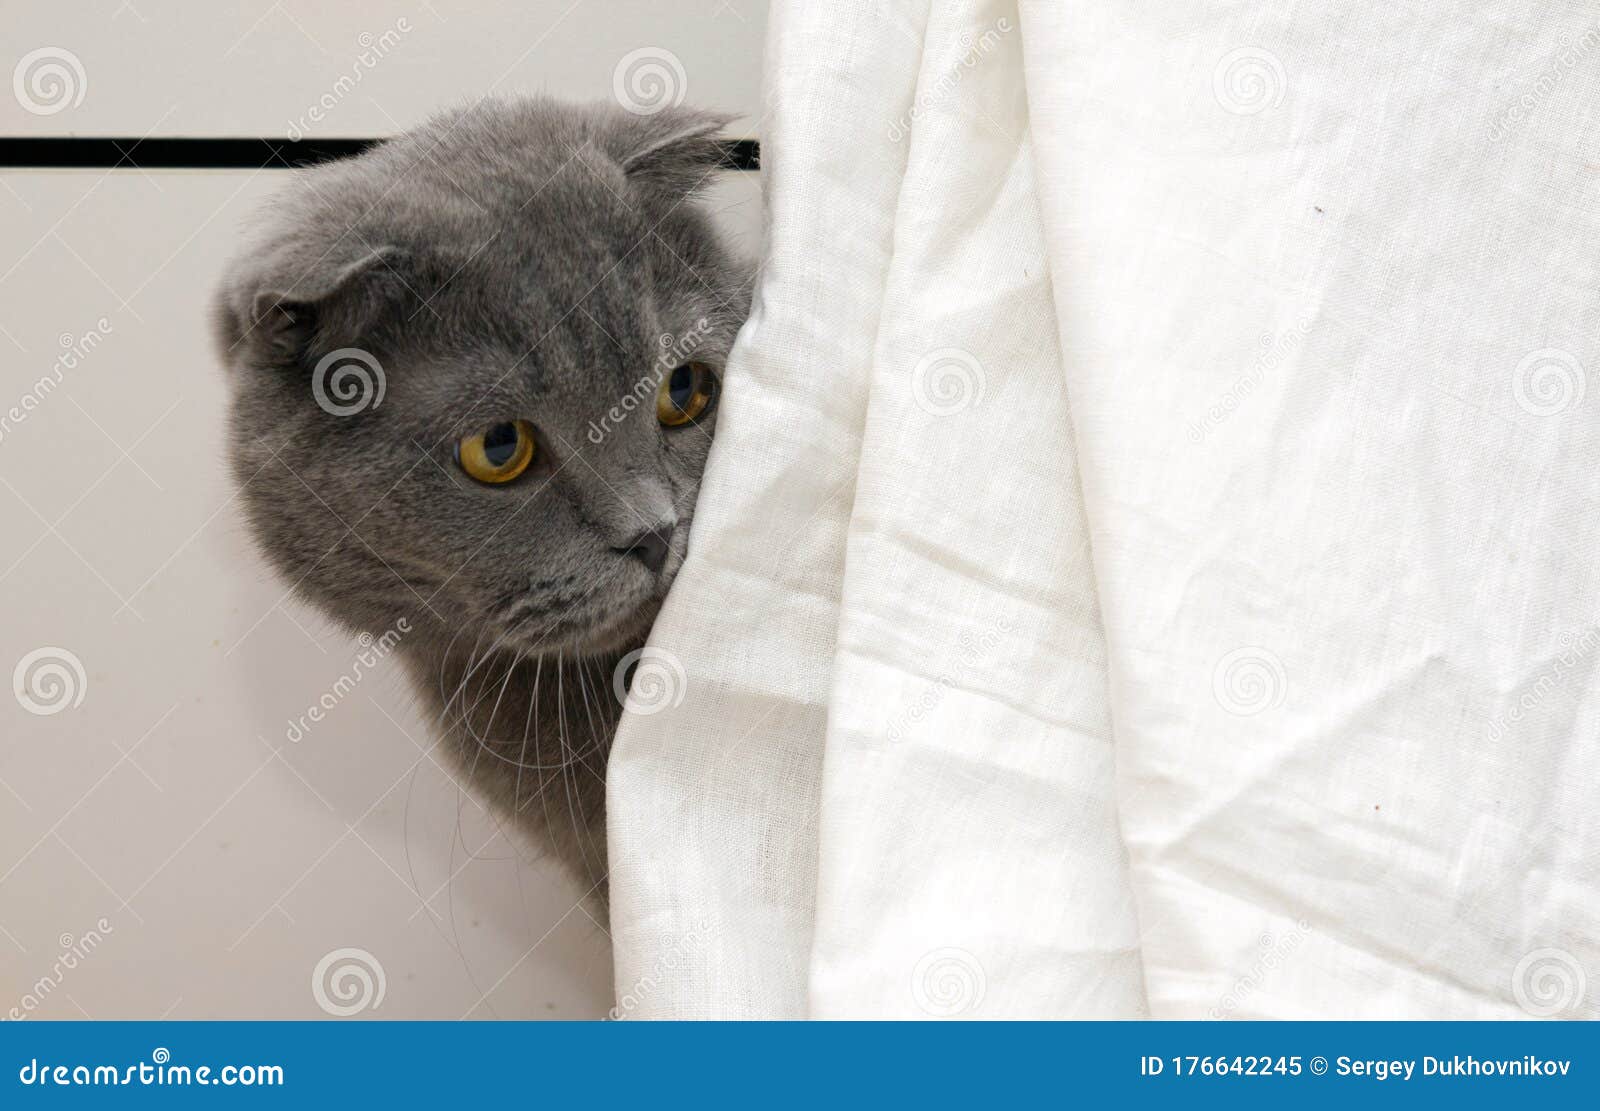 Beautiful Fluffy Cute Cat Poses As A Model Stock Image Image Of Model Cute 176642245